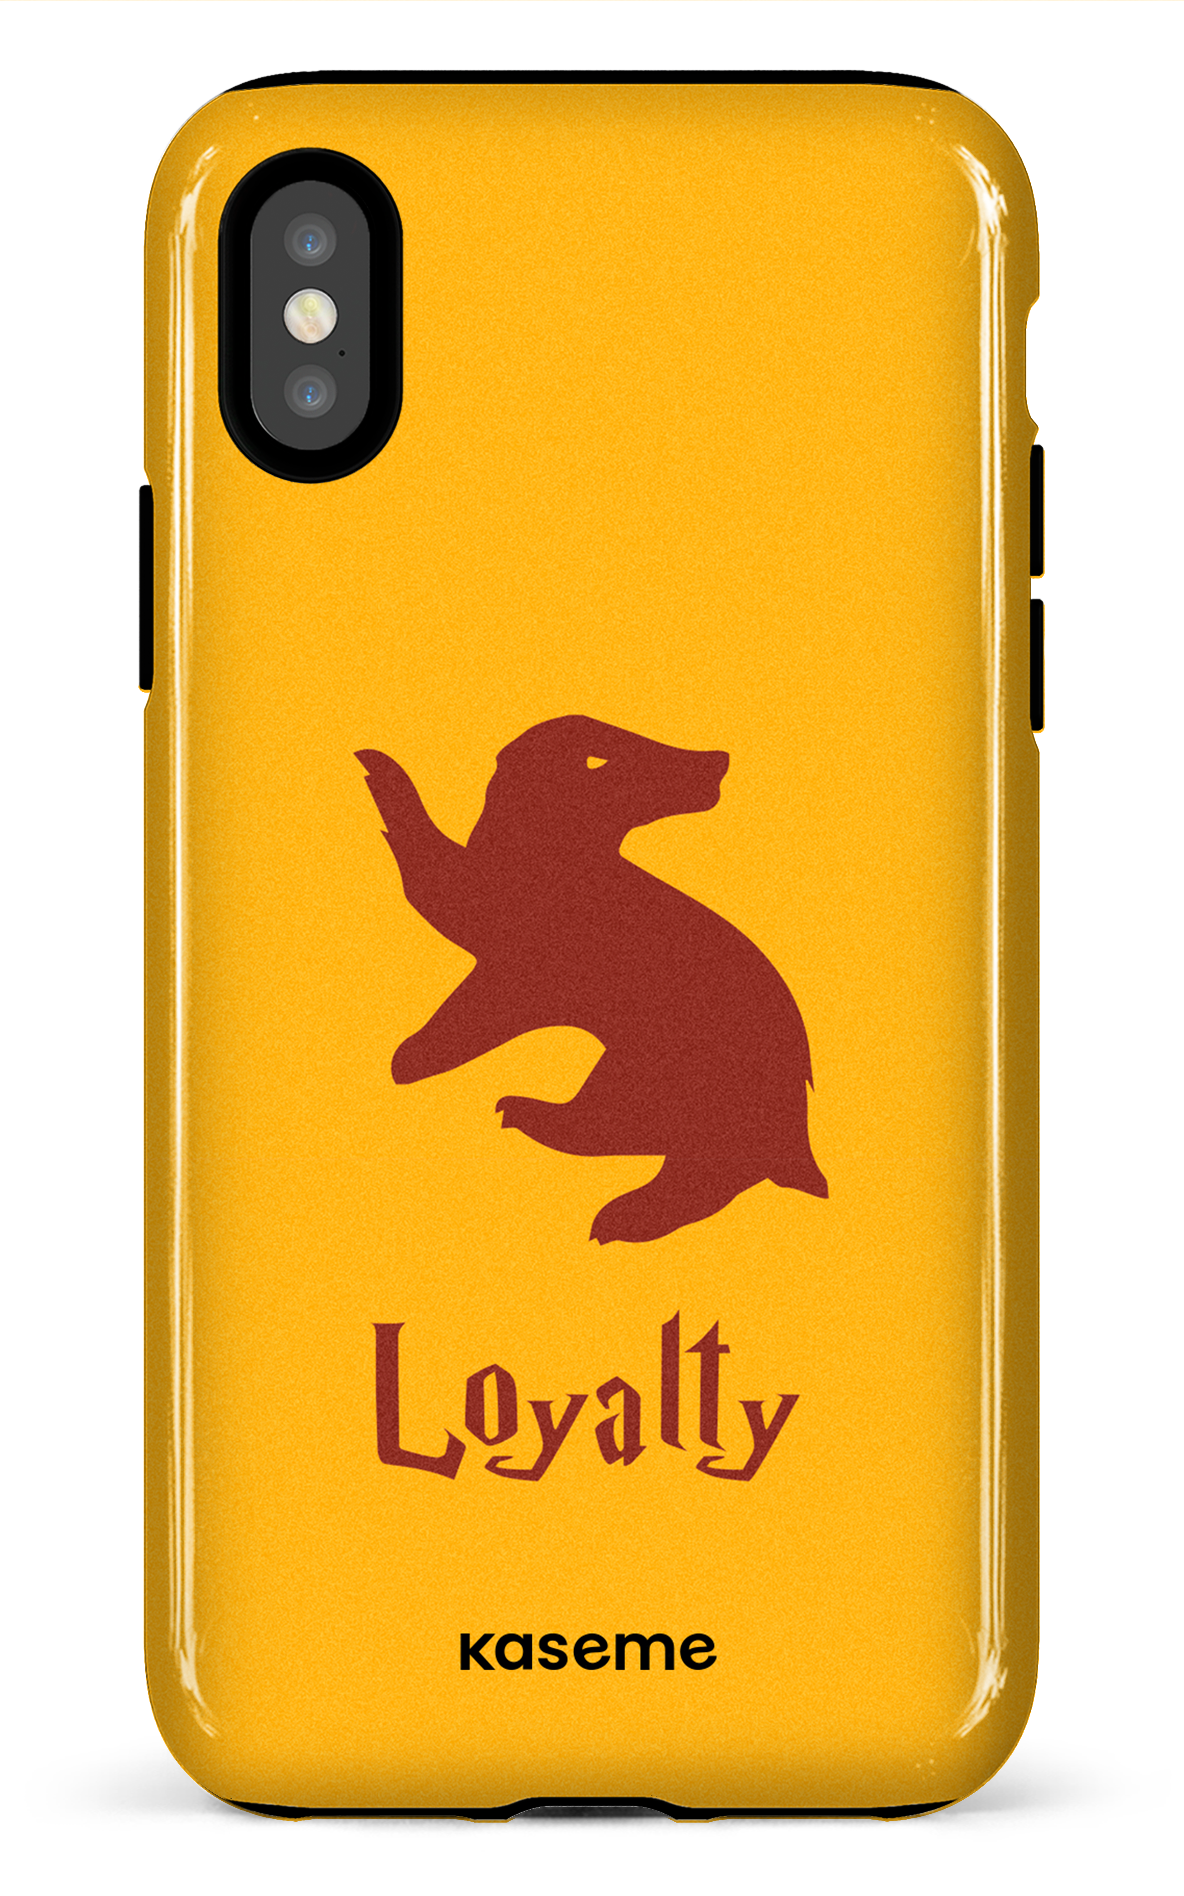 Loyalty - iPhone X/XS